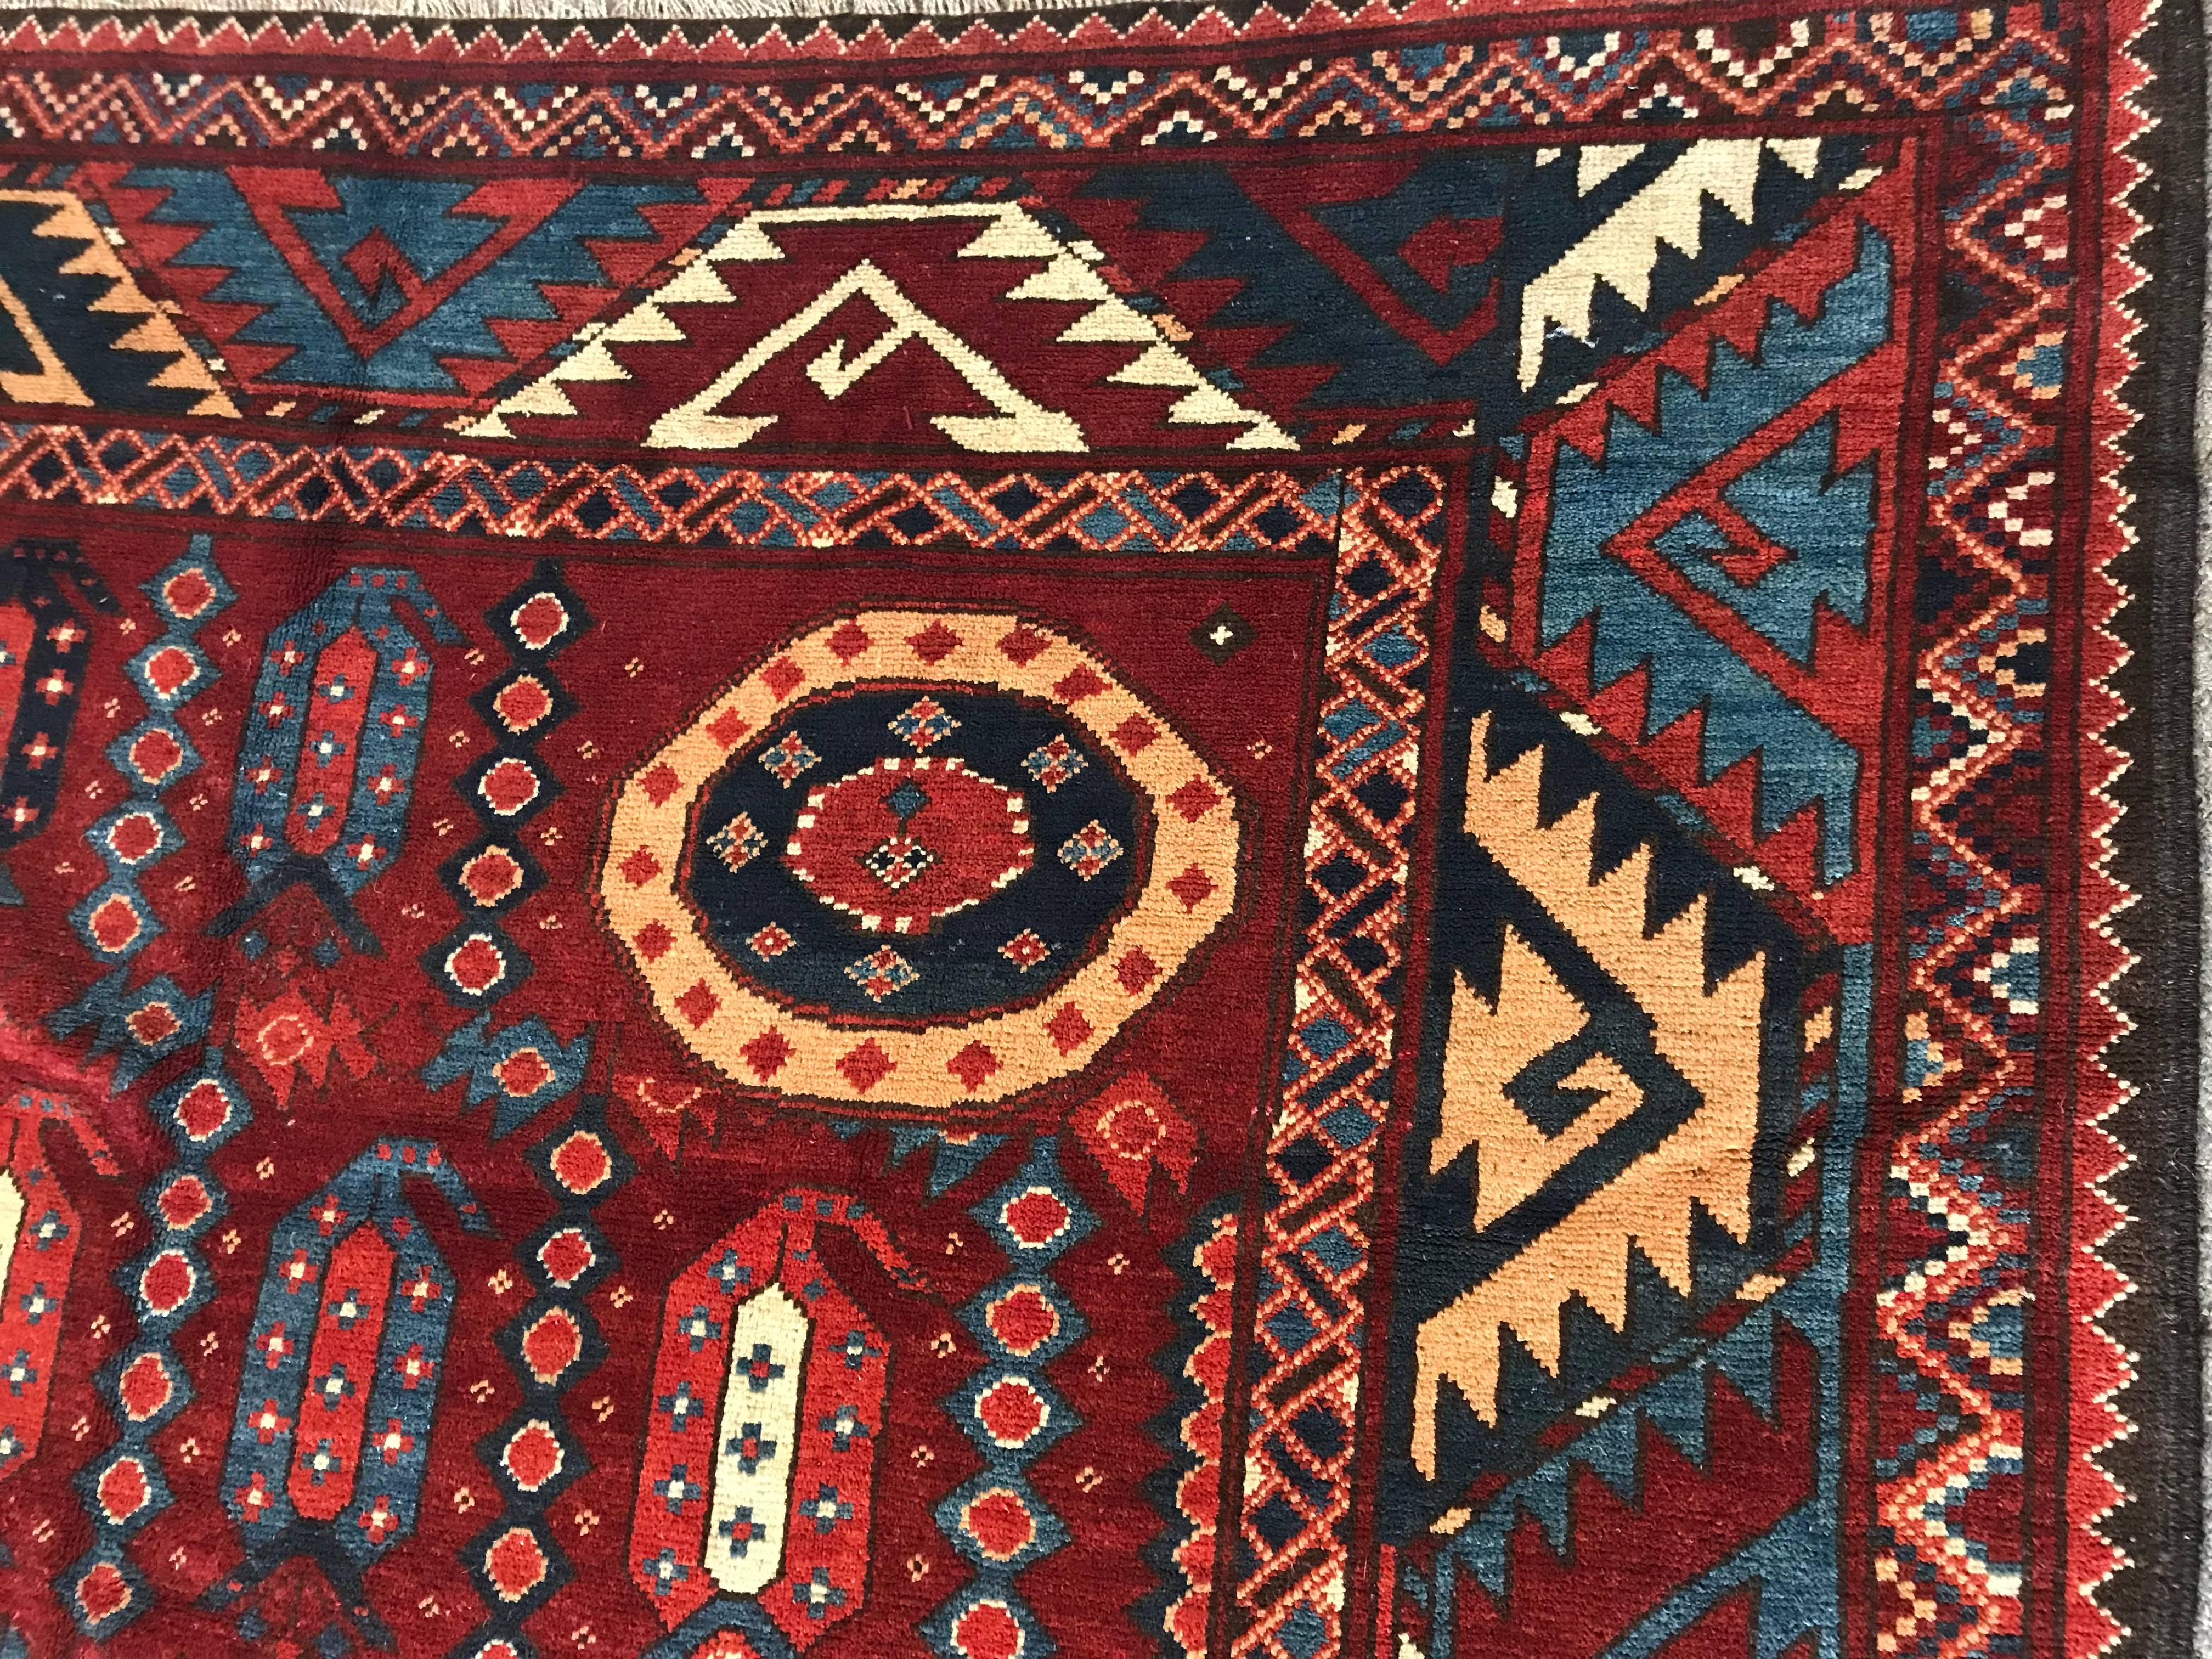 20th Century Contemporary Beshir Carpet or Rug